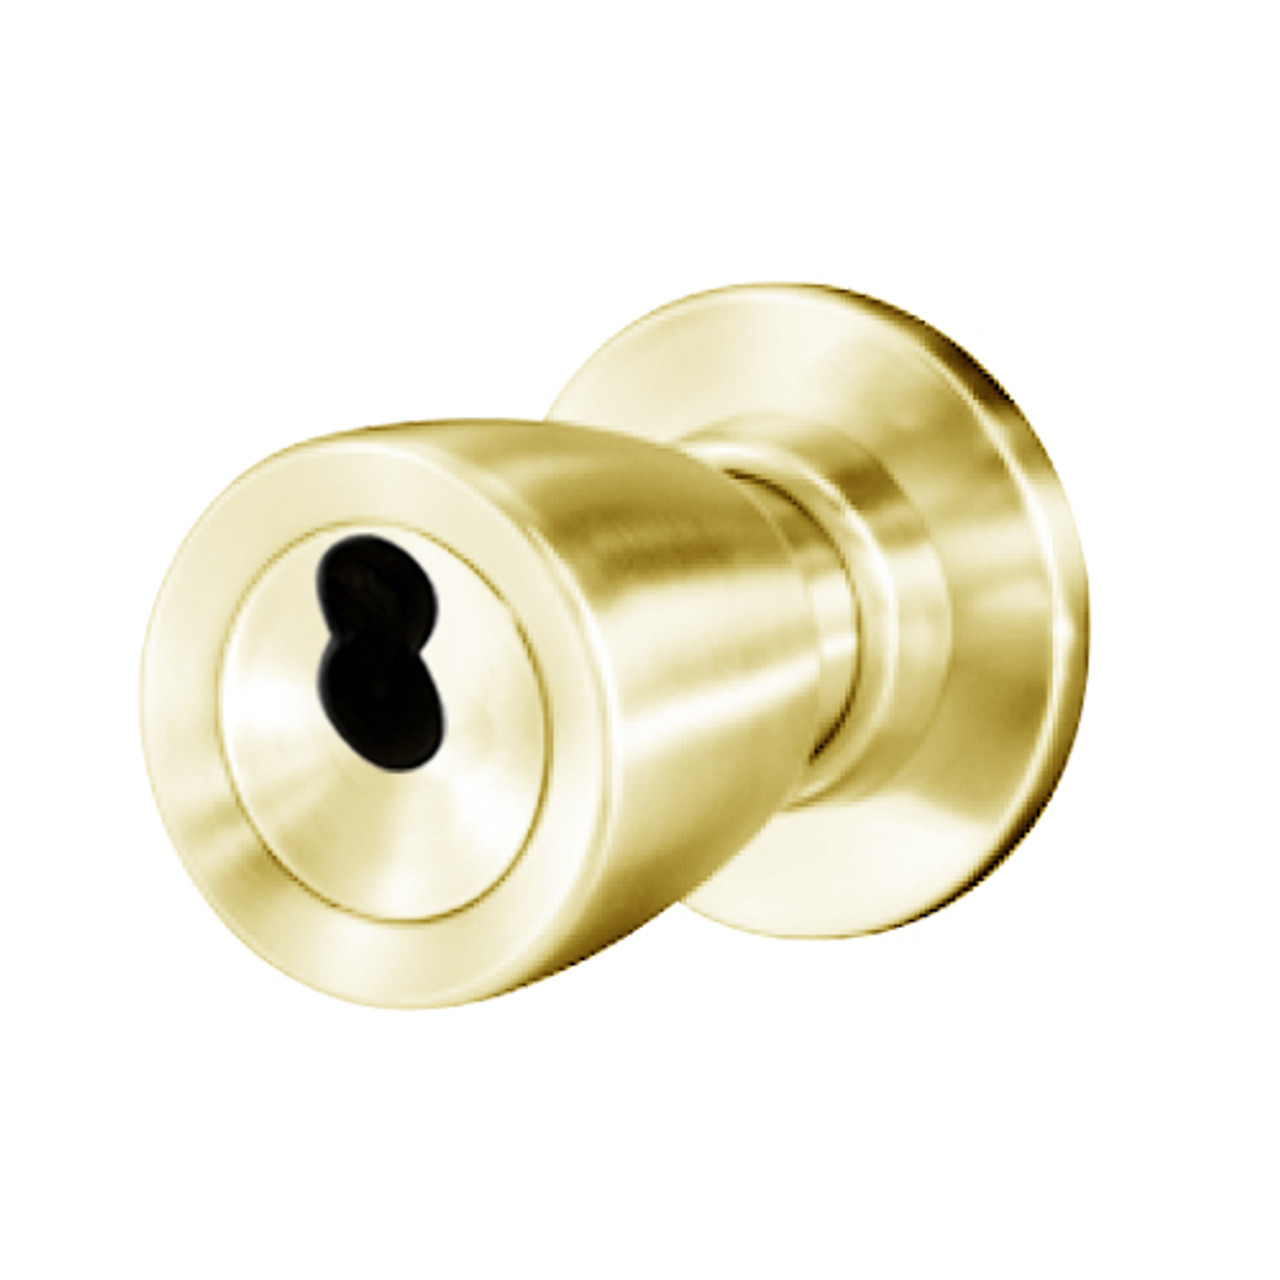 8K47YD6CS3605 Best 8K Series Exit Heavy Duty Cylindrical Knob Locks with Tulip Style in Bright Brass